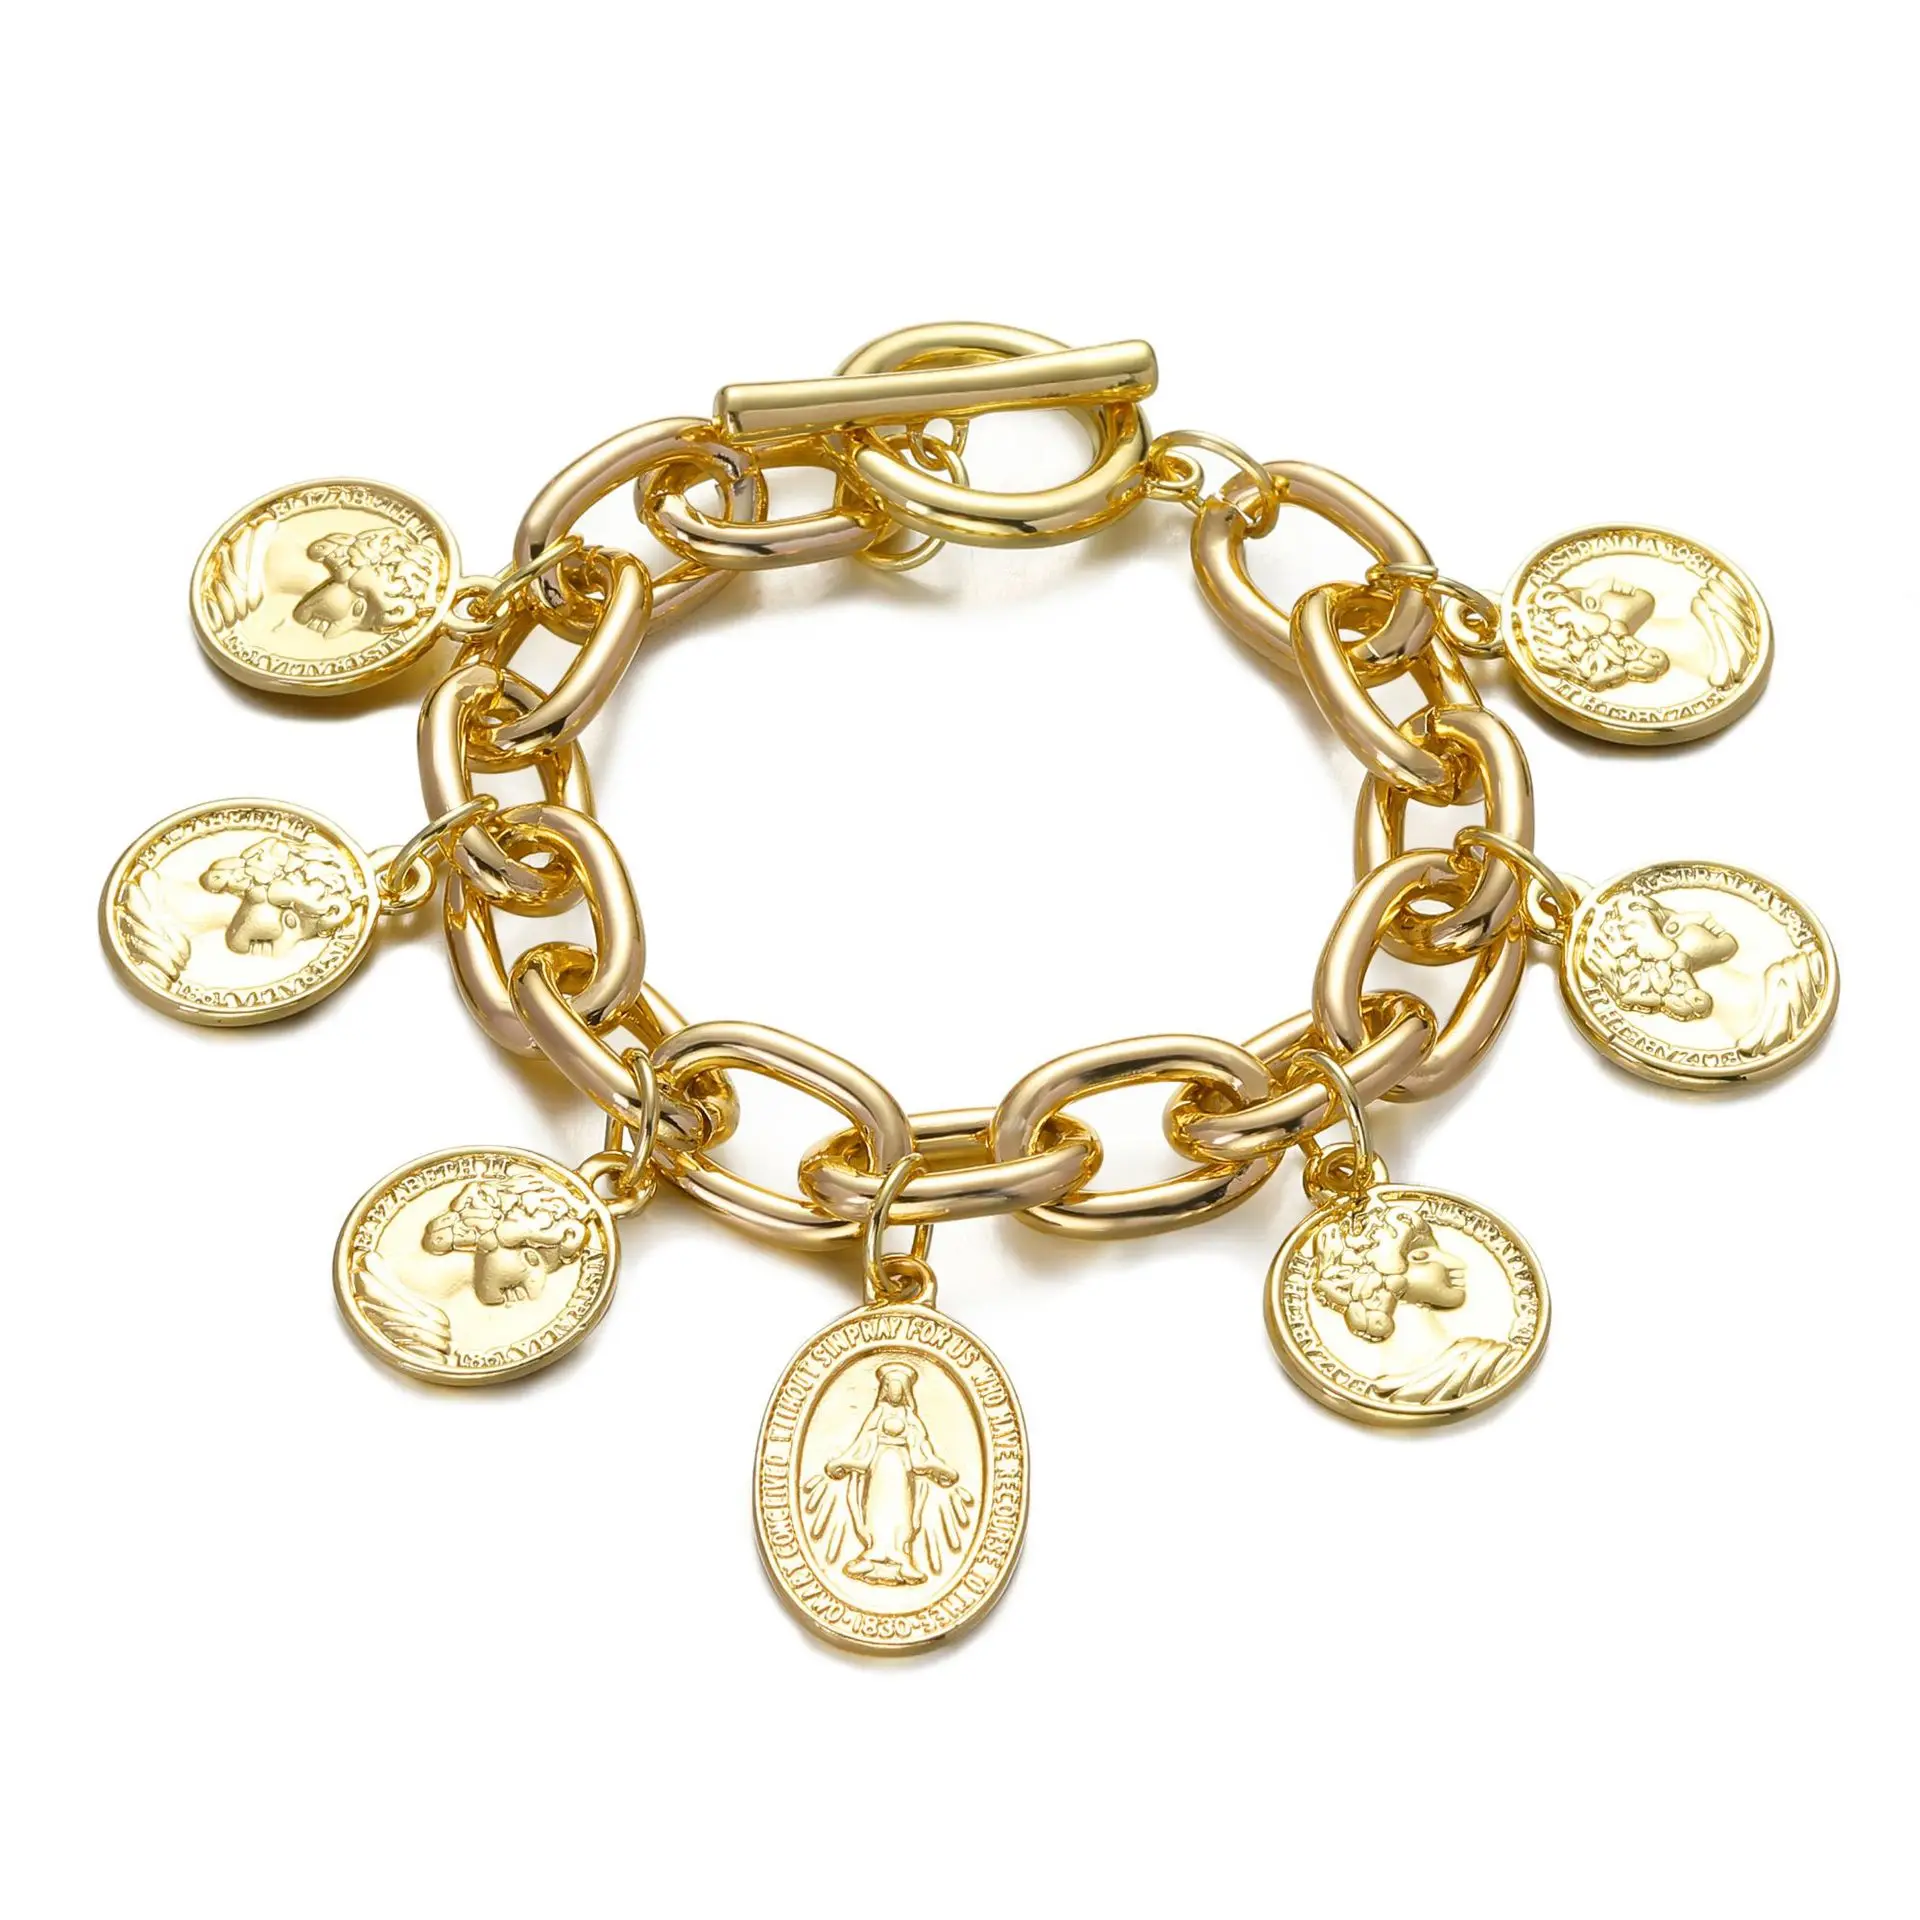 We buy gold charm bracelets.